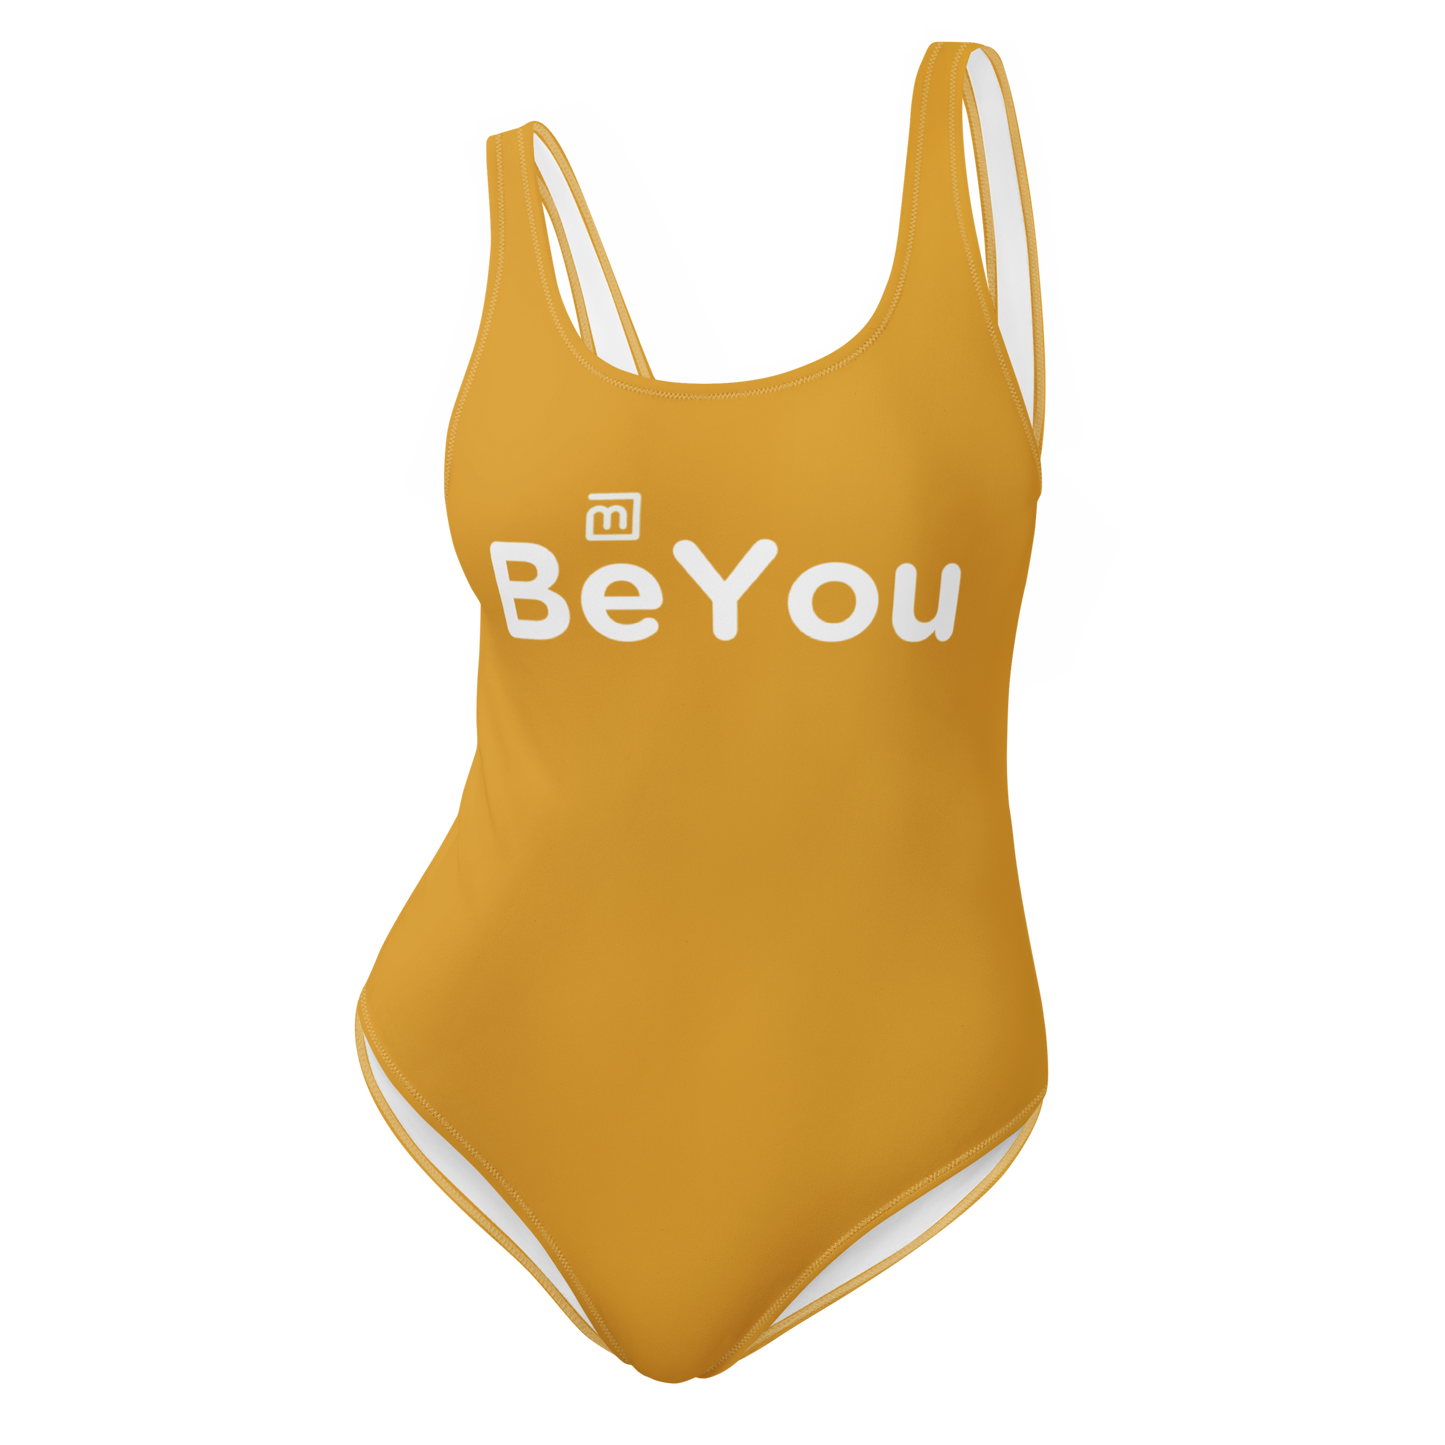 Buttercup Gold One-Piece Body Shaper BeYou Swimsuit